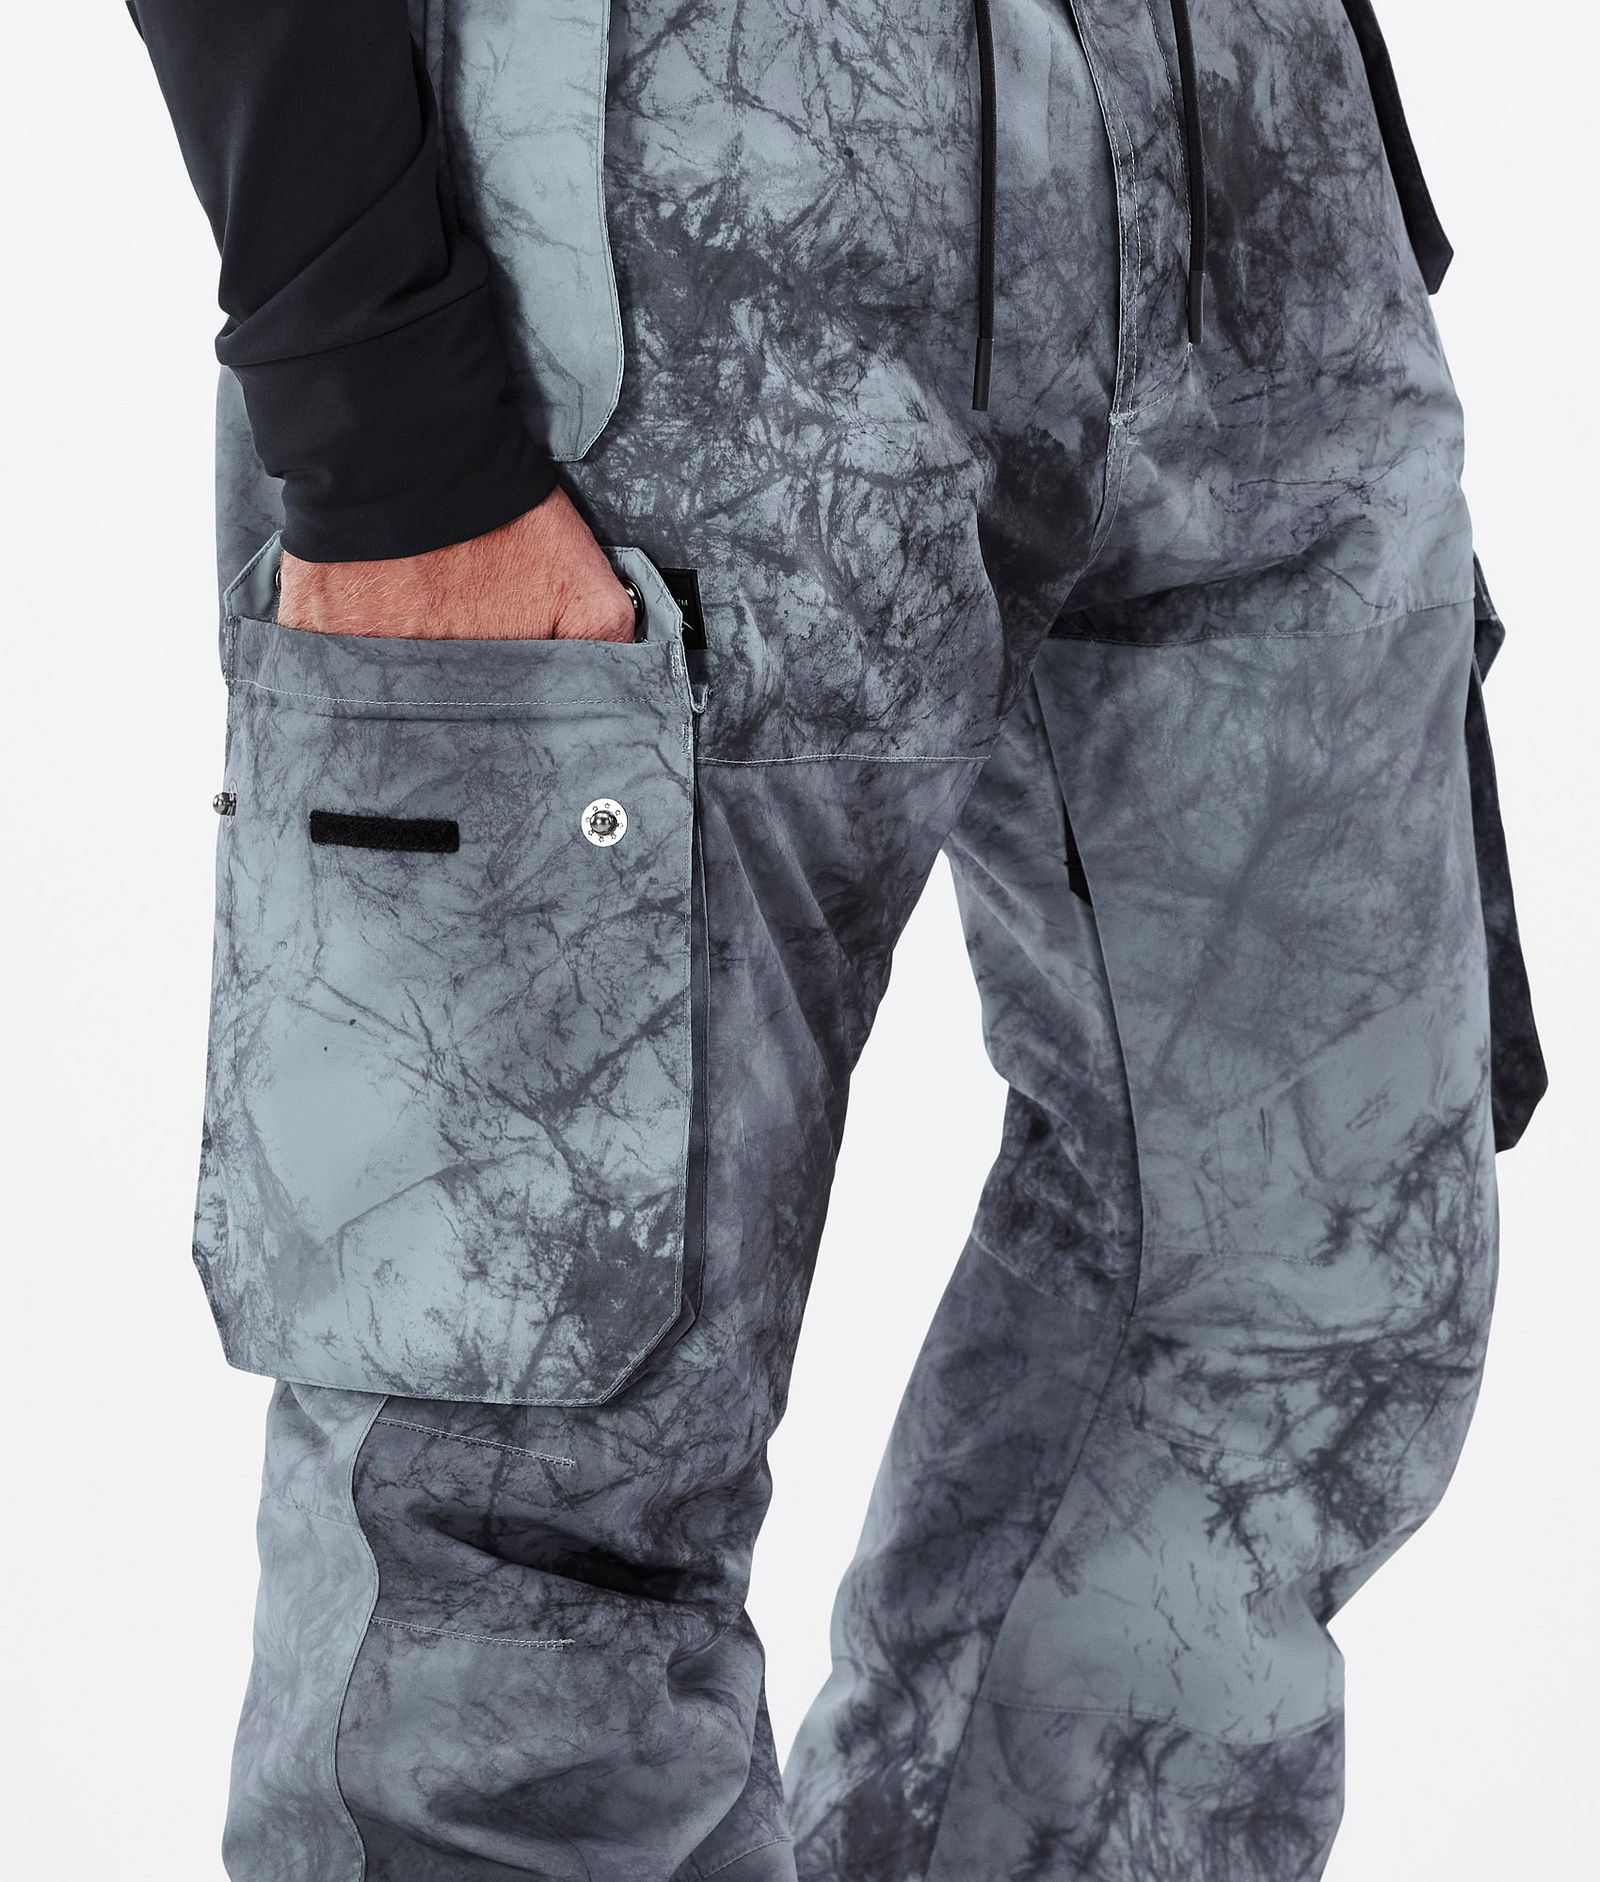 Iconic Pantaloni Sci Uomo Dirt